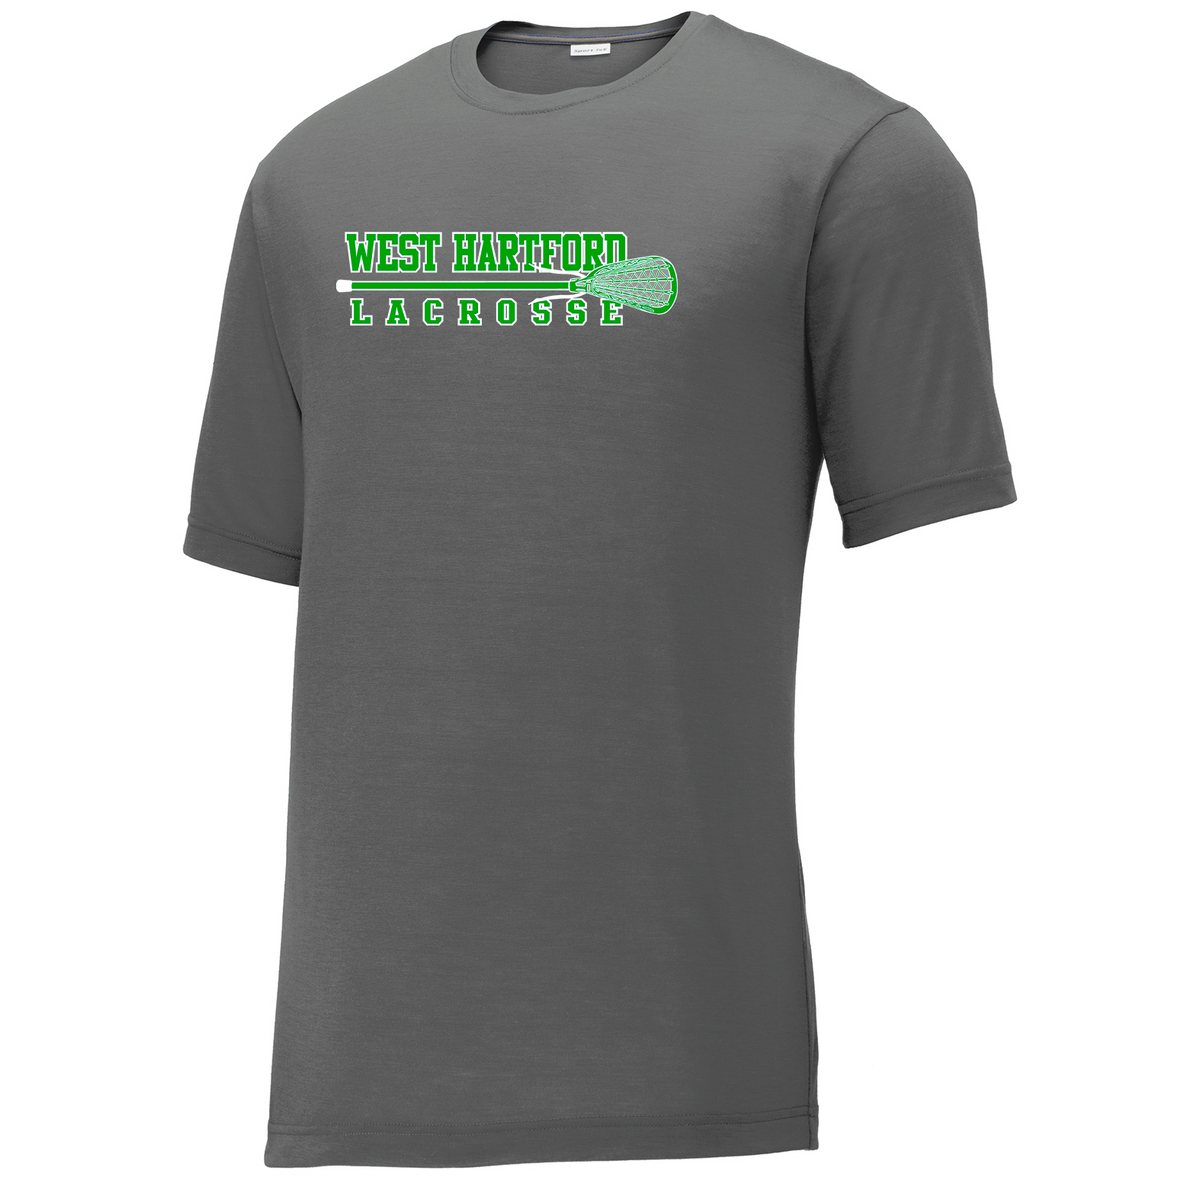 West Hartford Lacrosse CottonTouch Performance T-Shirt